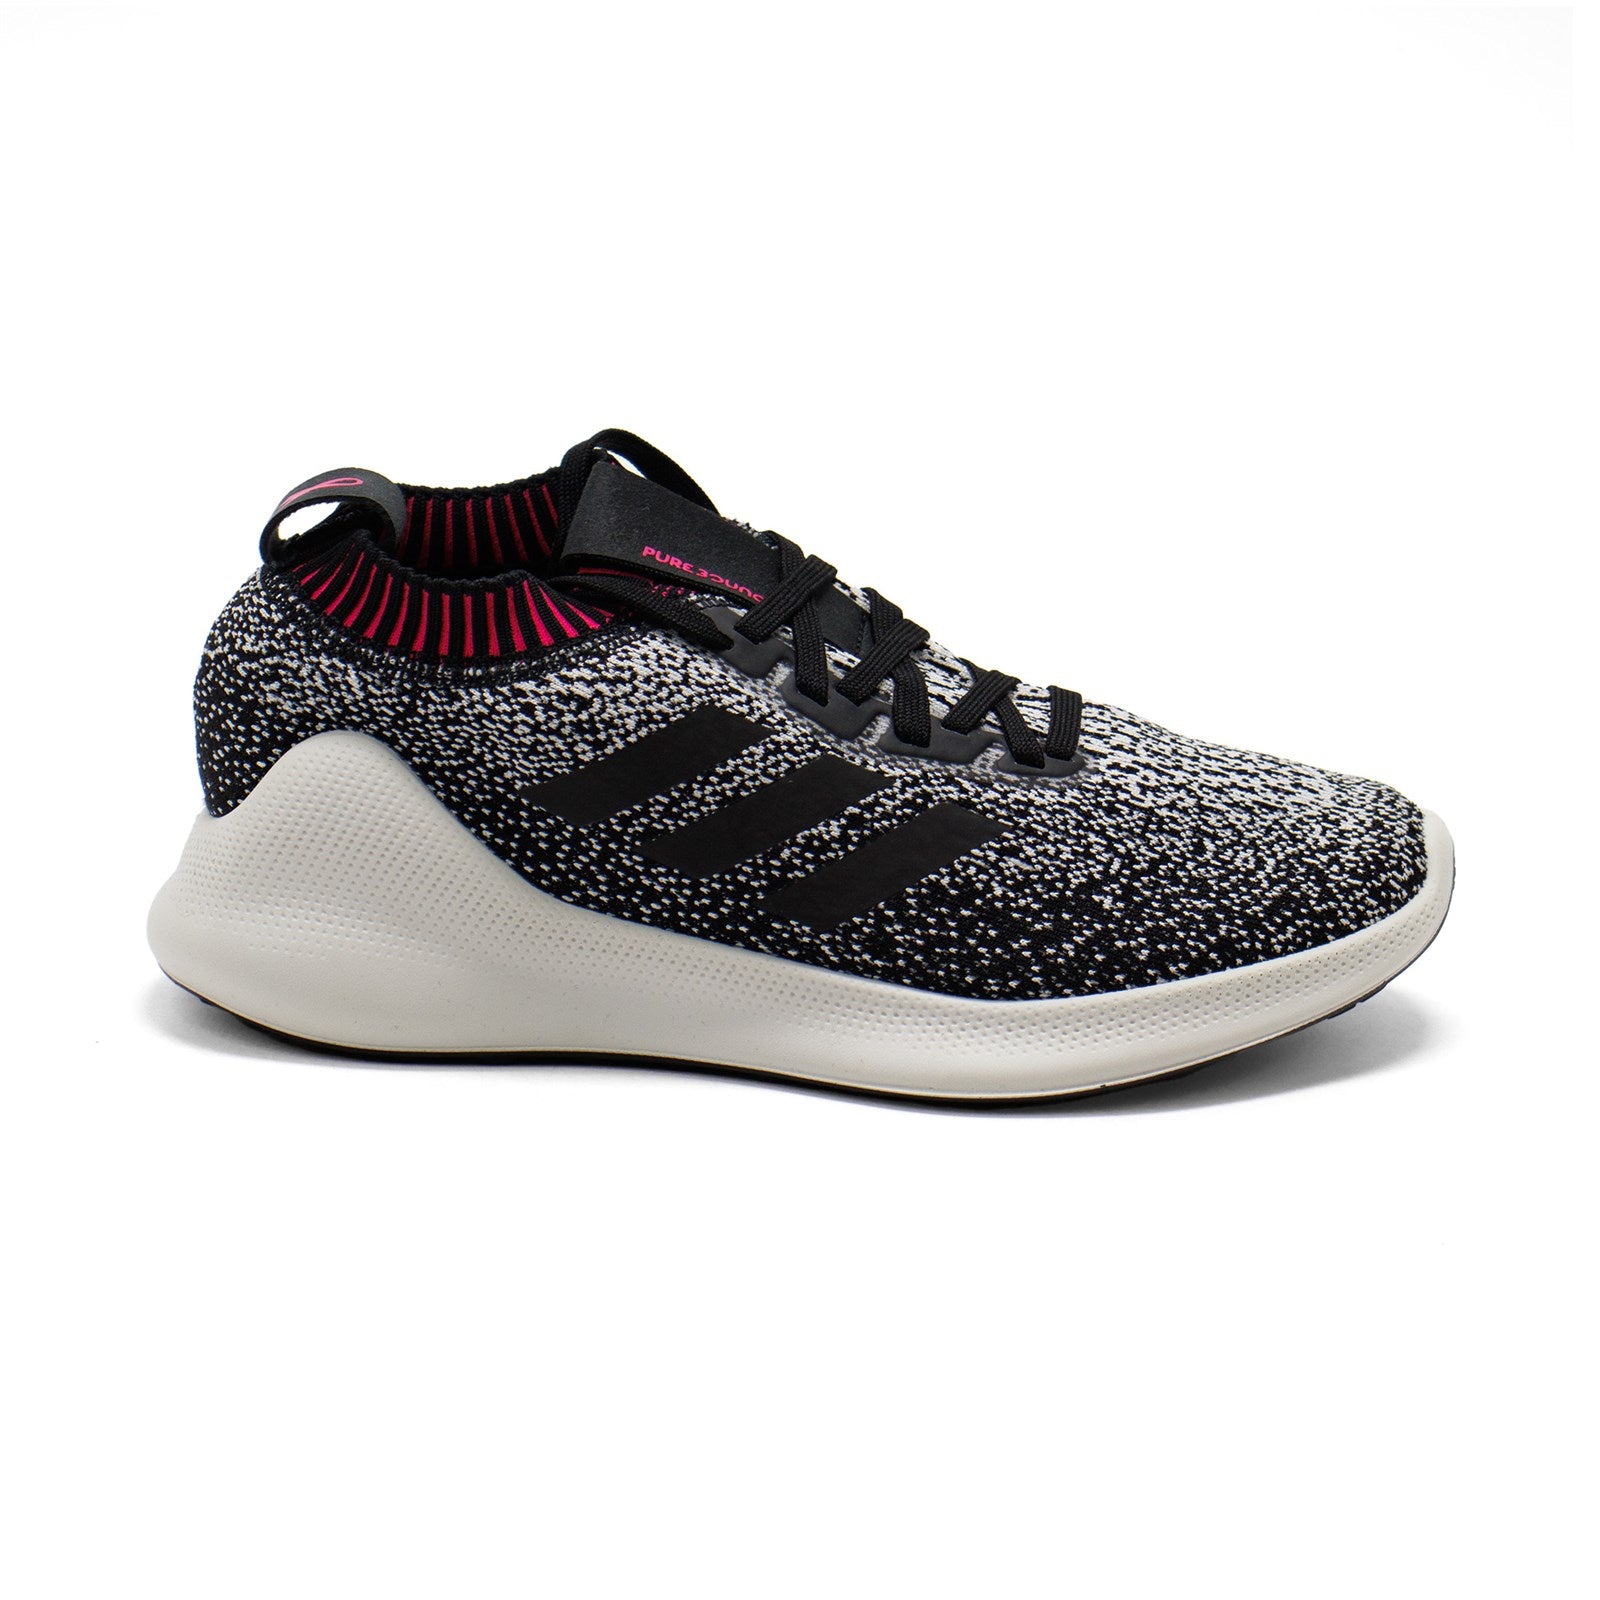 Adidas Women Purebounce+ Running Shoes